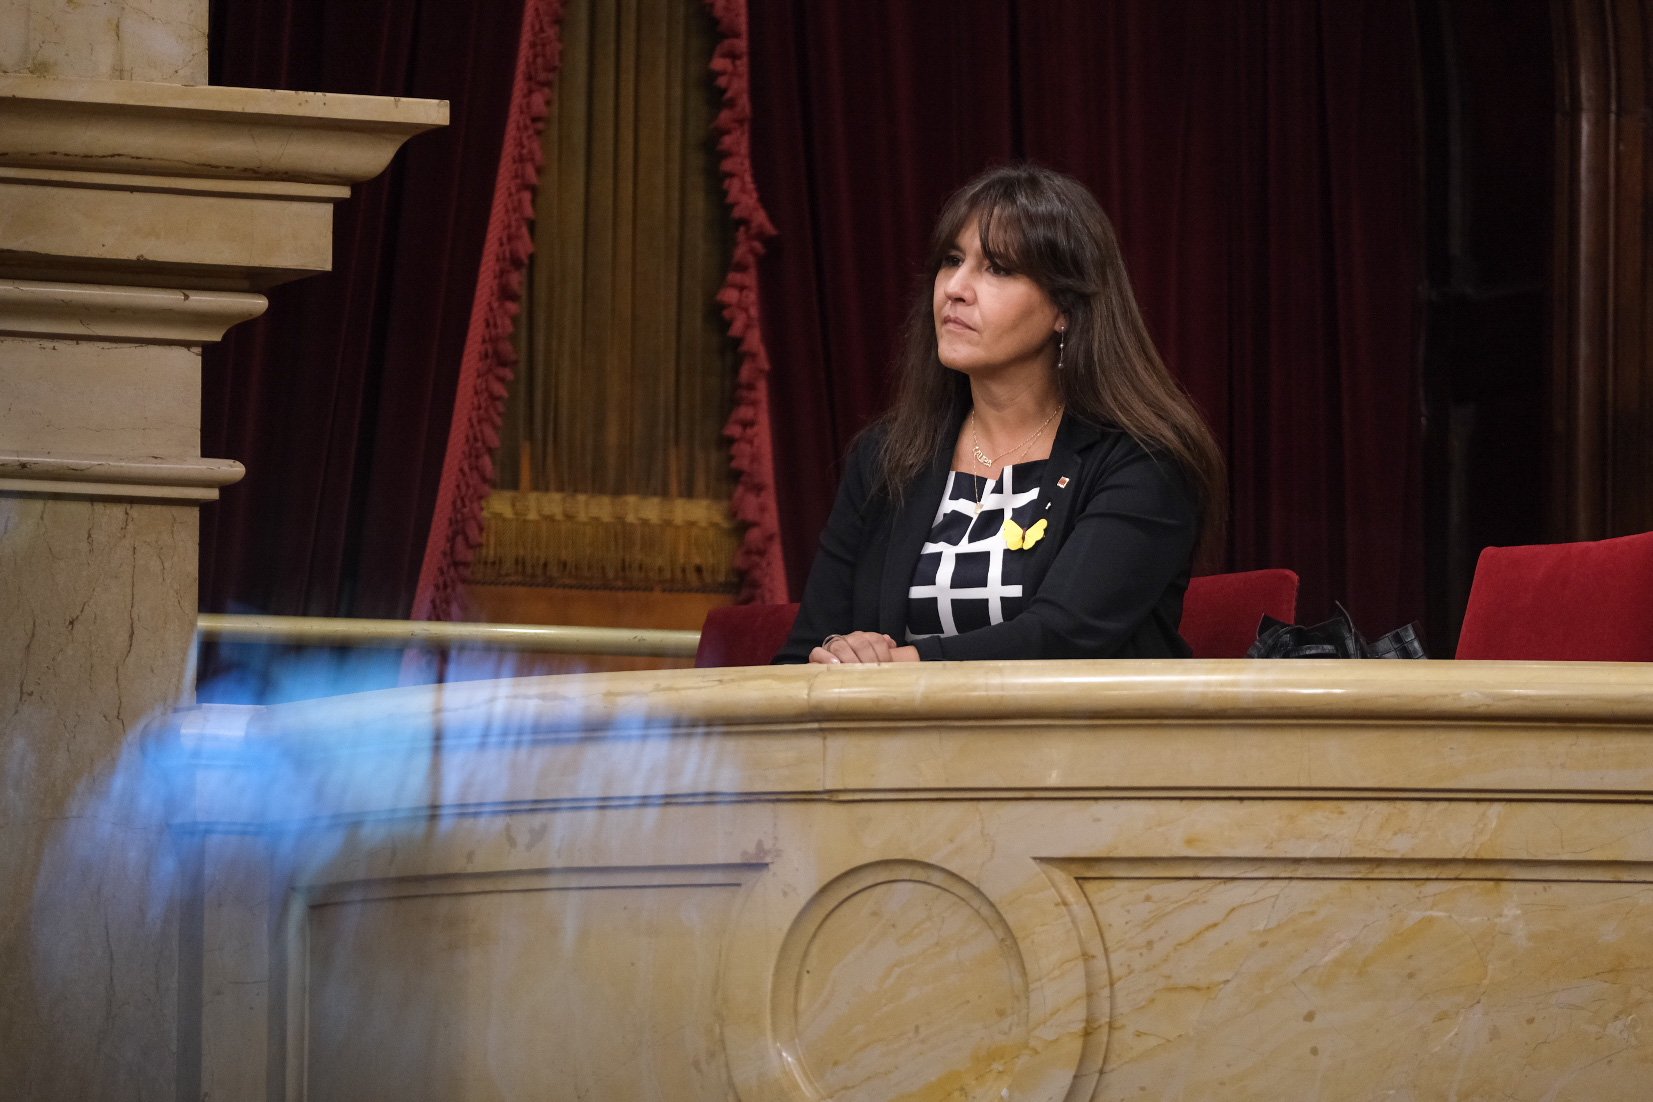 Laura Borràs to challenge judge Barrientos, designated to preside over ILC trial